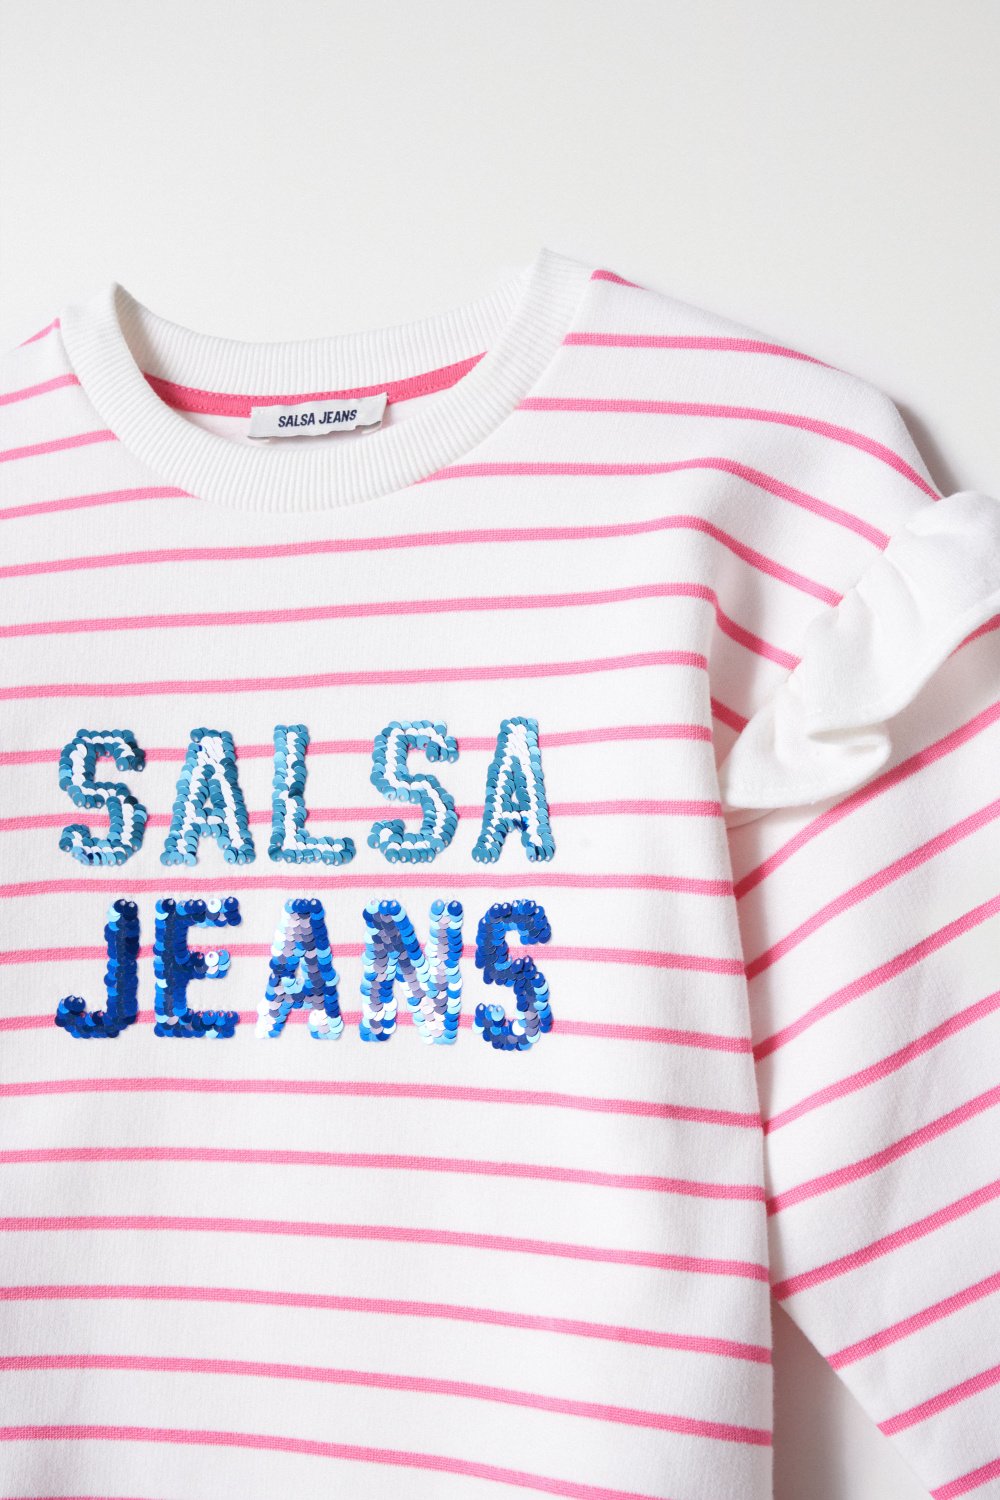 Limited edition striped sweatshirt for girls - Salsa